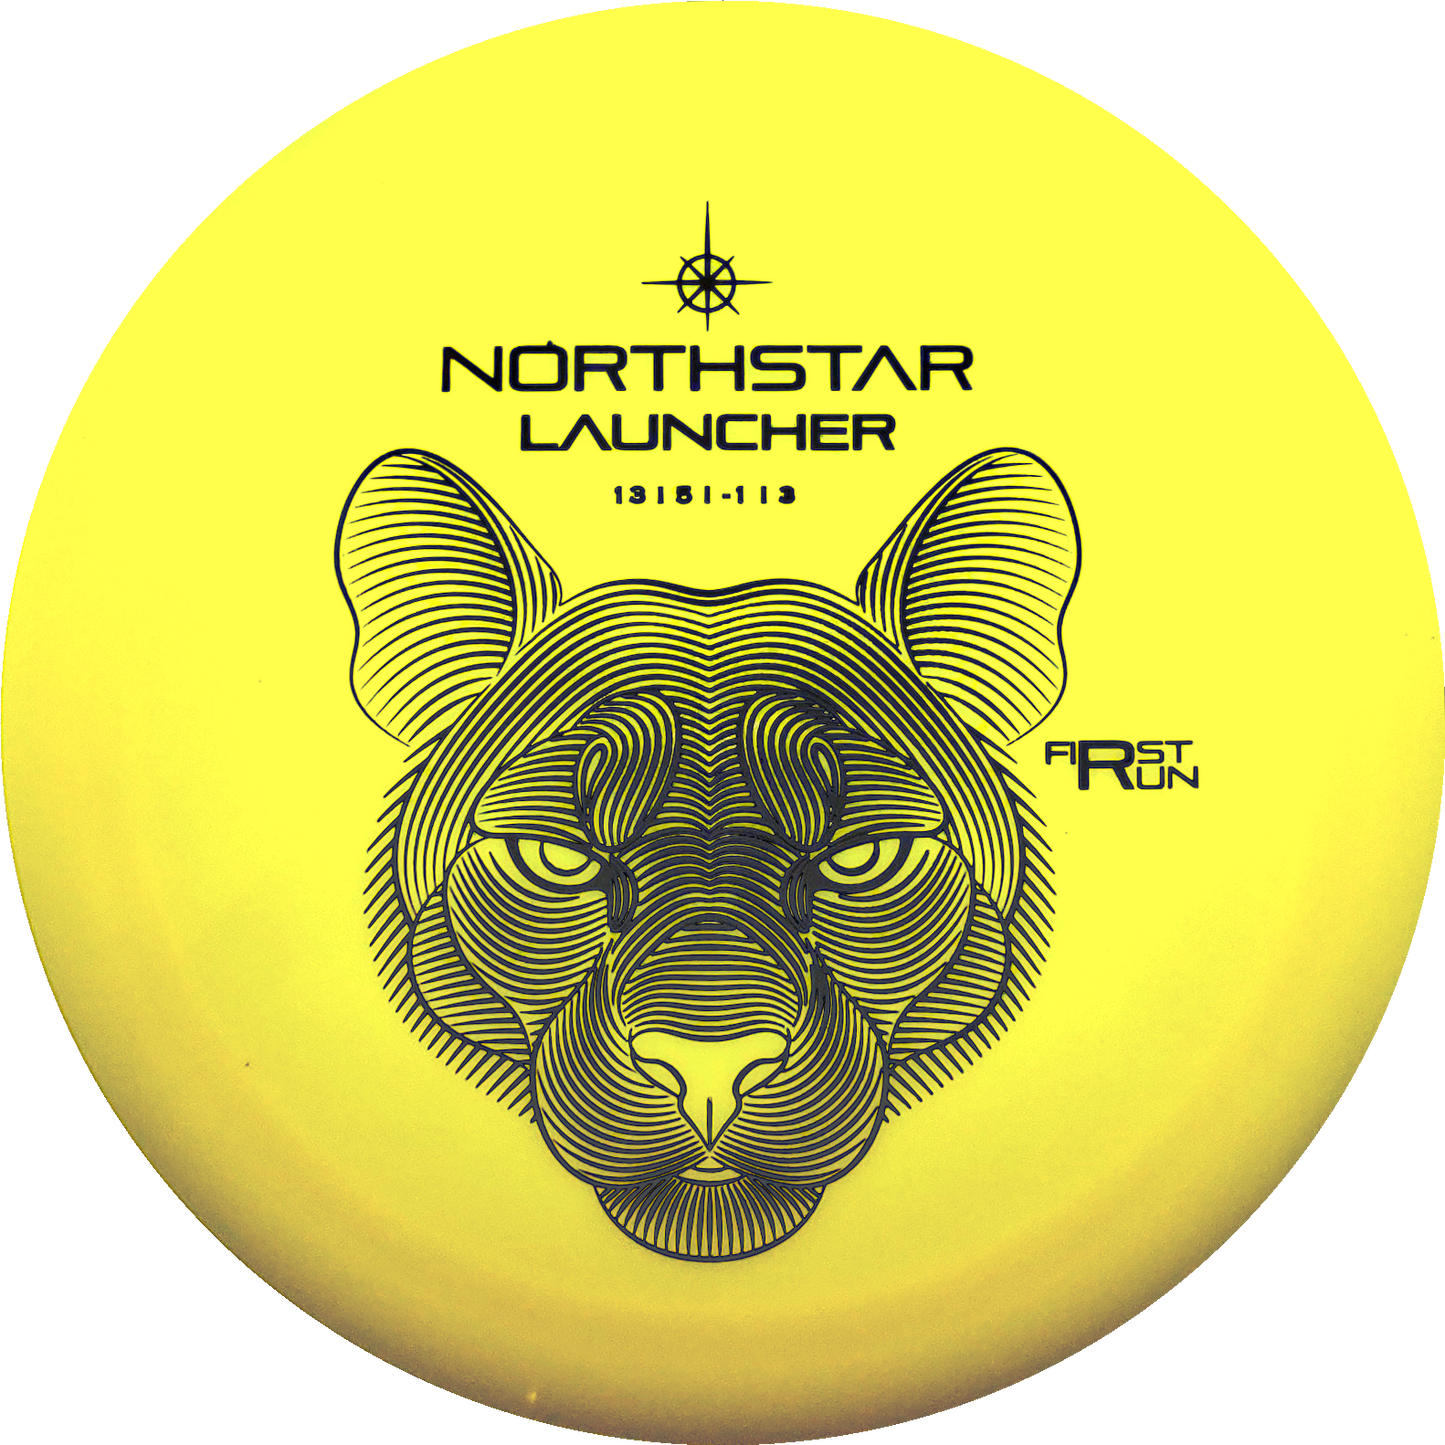 Northstar C-Line Launcher